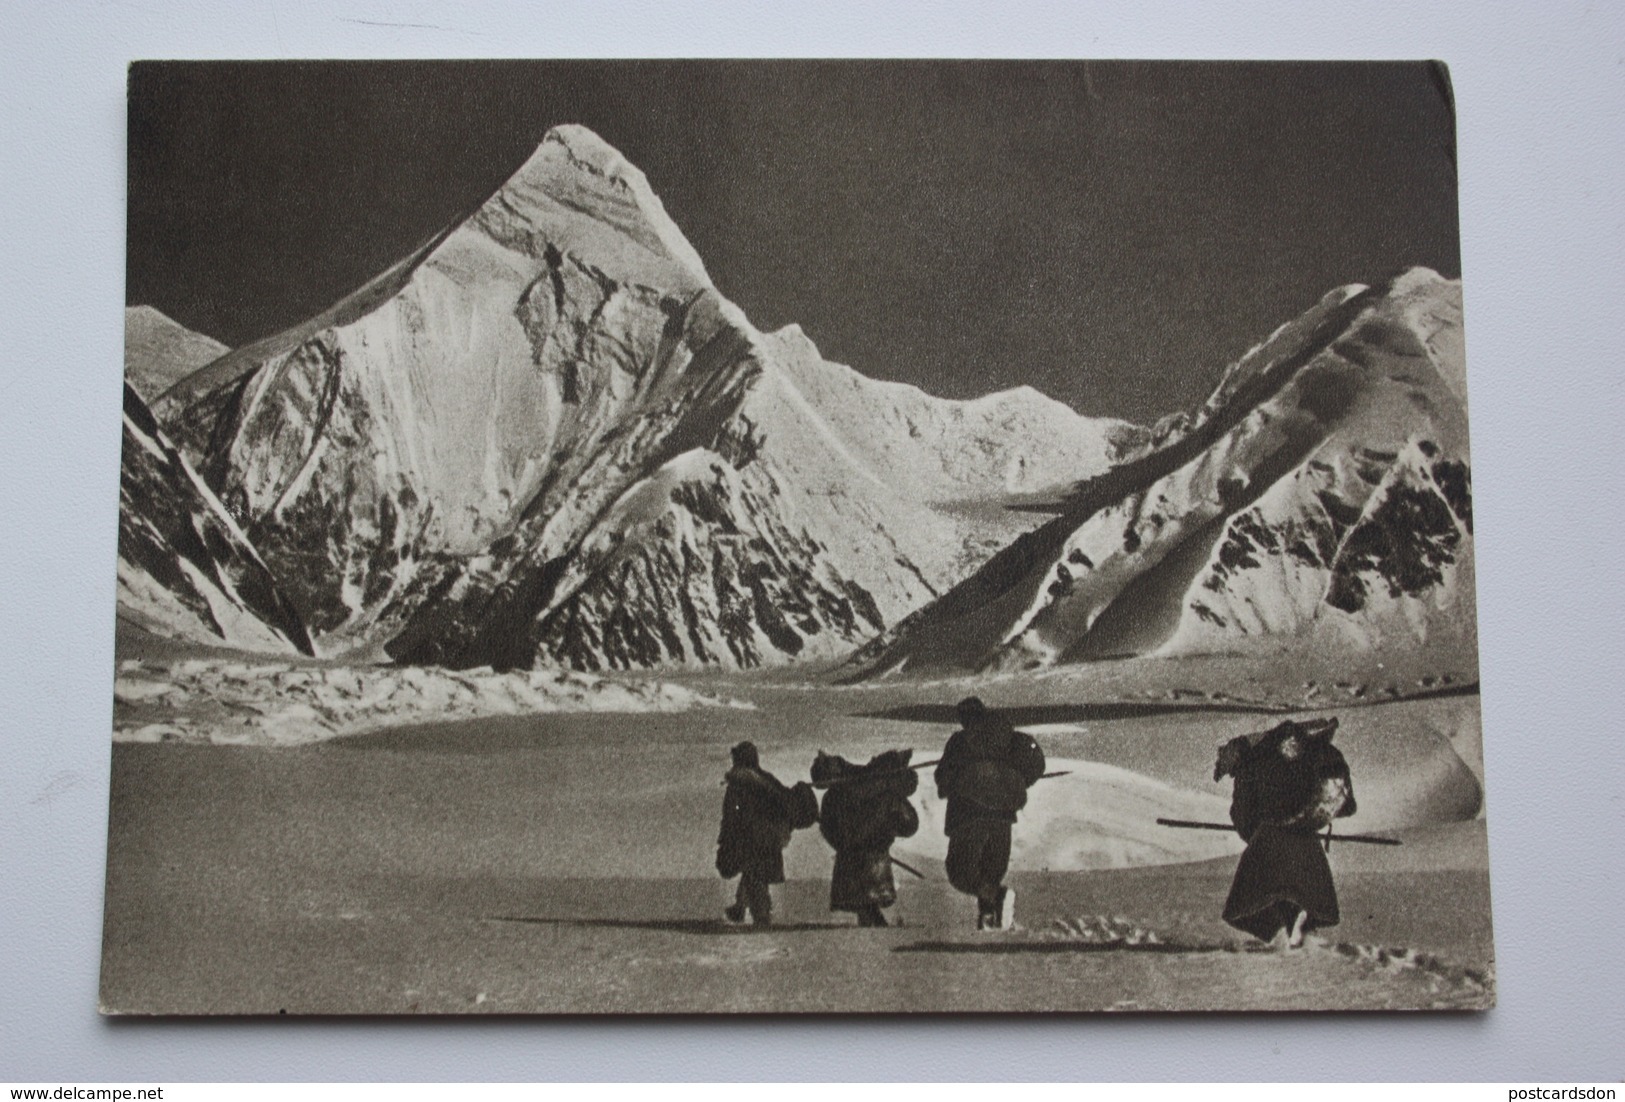 Kyrgyzstan. Tian Shan Mountains. Khan Tengri  - Old USSR Postcard 1956 - Mountaineering ALPINISM - Kyrgyzstan